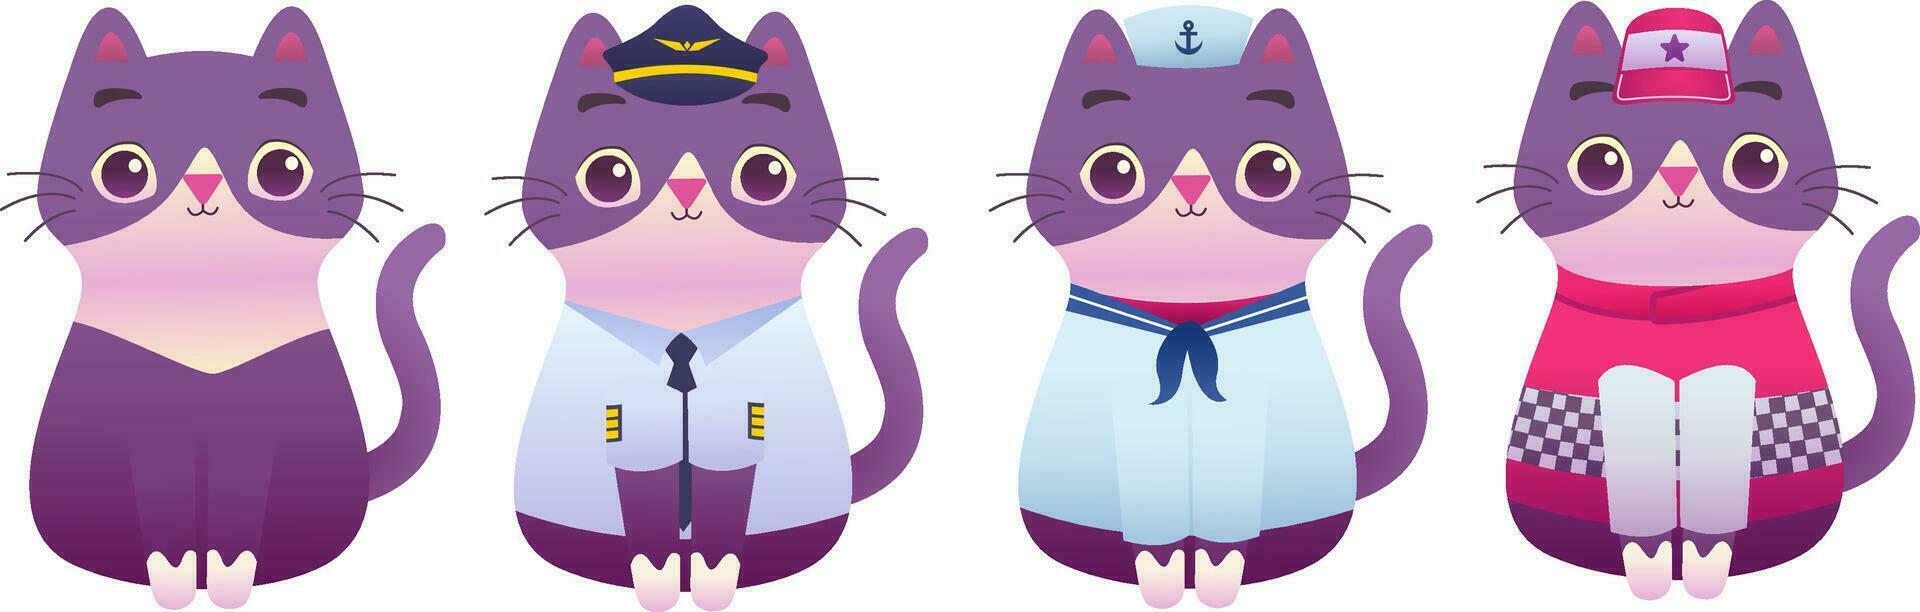 linda adorable gatito gato profesional trabajador mascota moderno plano ilustración personaje - piloto, marinero, corredor, mecánico vector